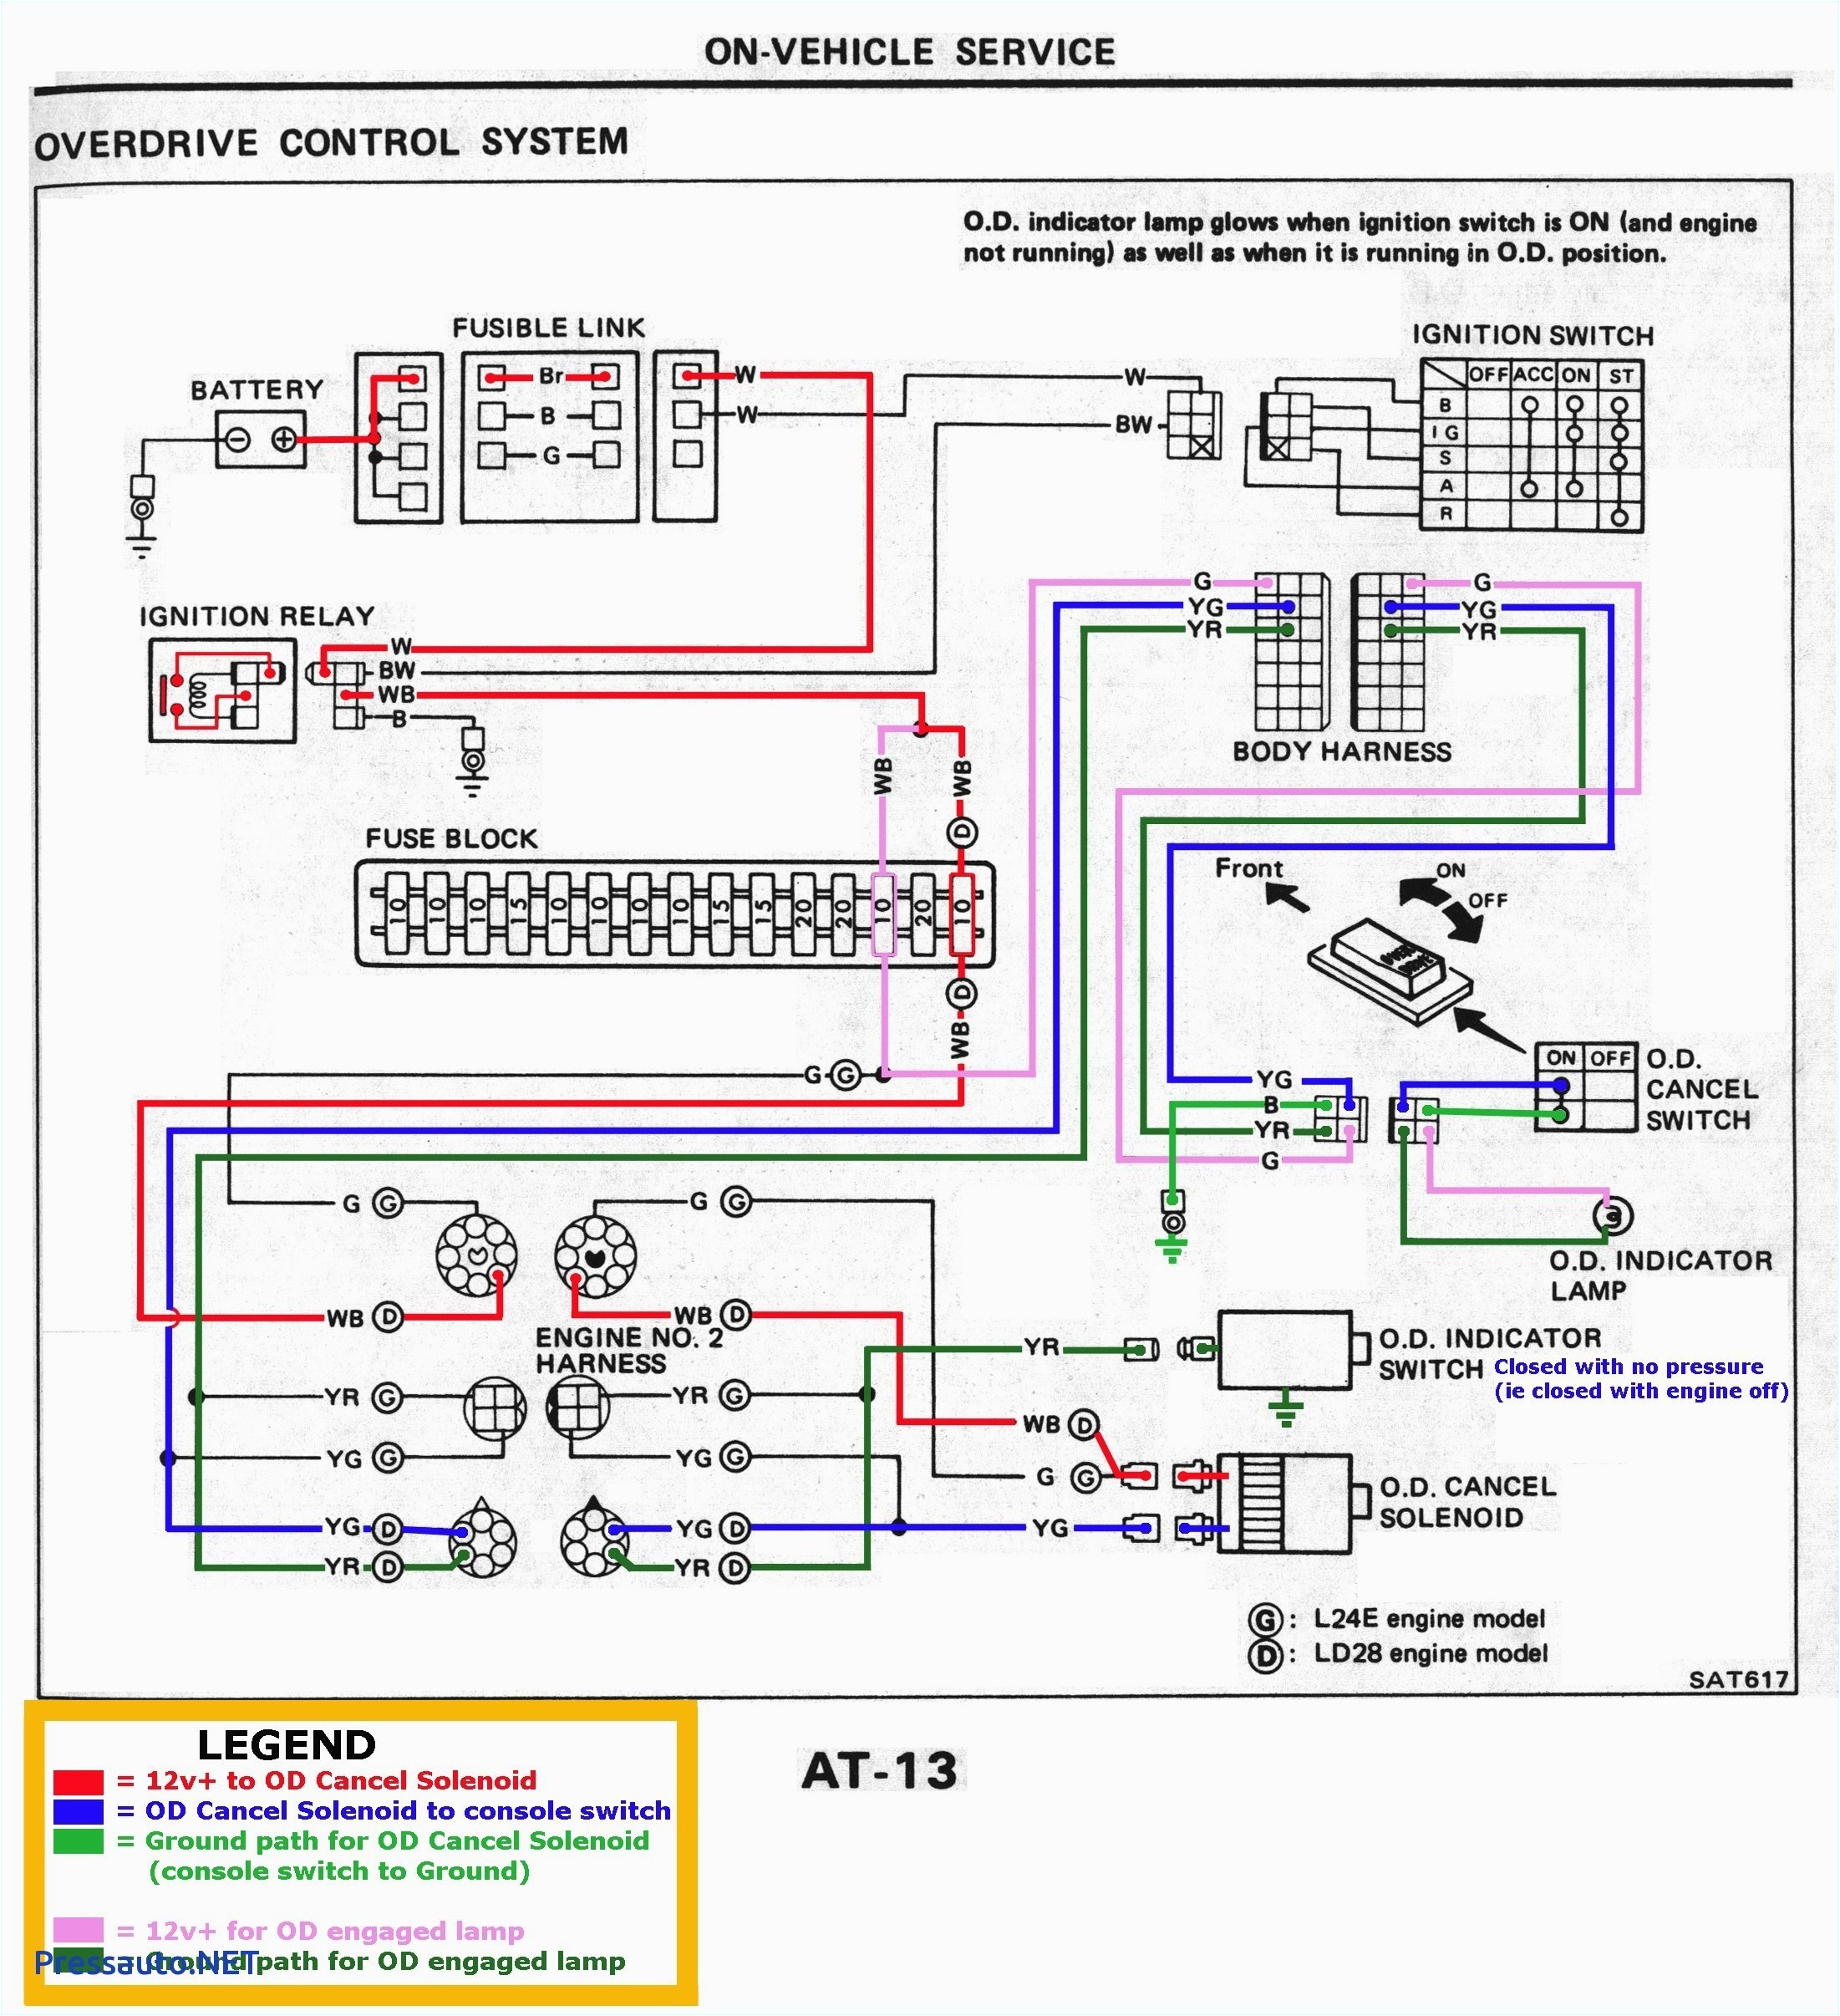 wiring diagram codes wiring diagram showwiring diagram codes wiring diagram name wiring diagram letter codes wiring